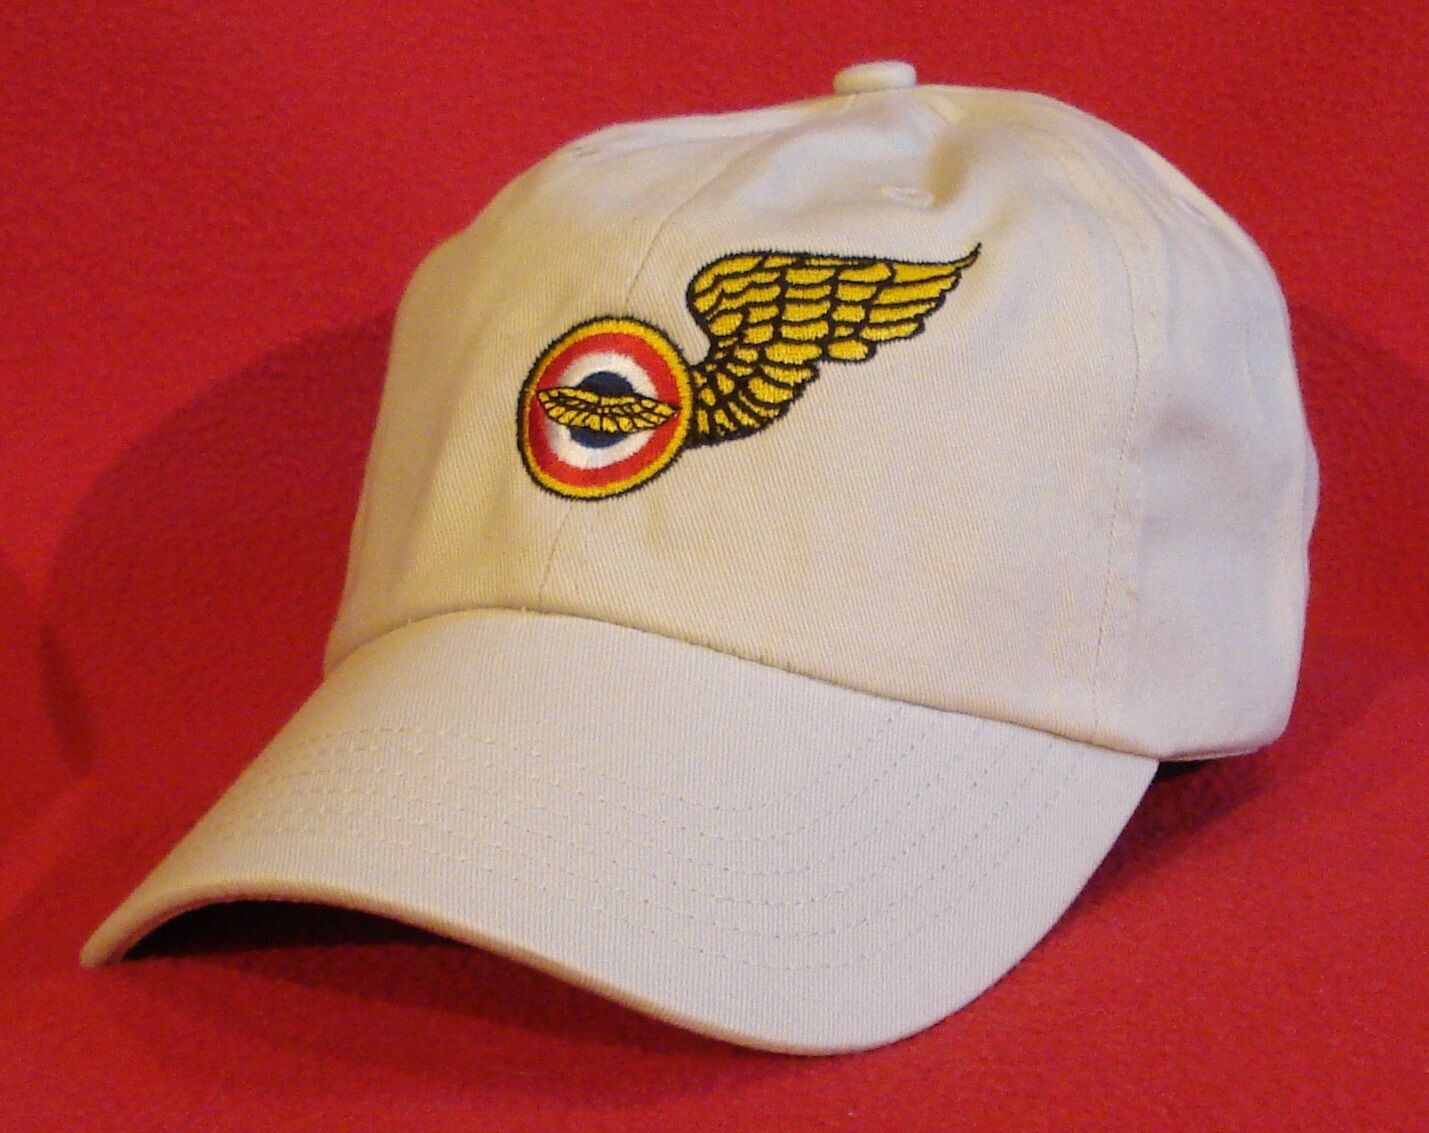 Northwest Orient Airlines Flight Attendant ball cap, low-profile hat - stone